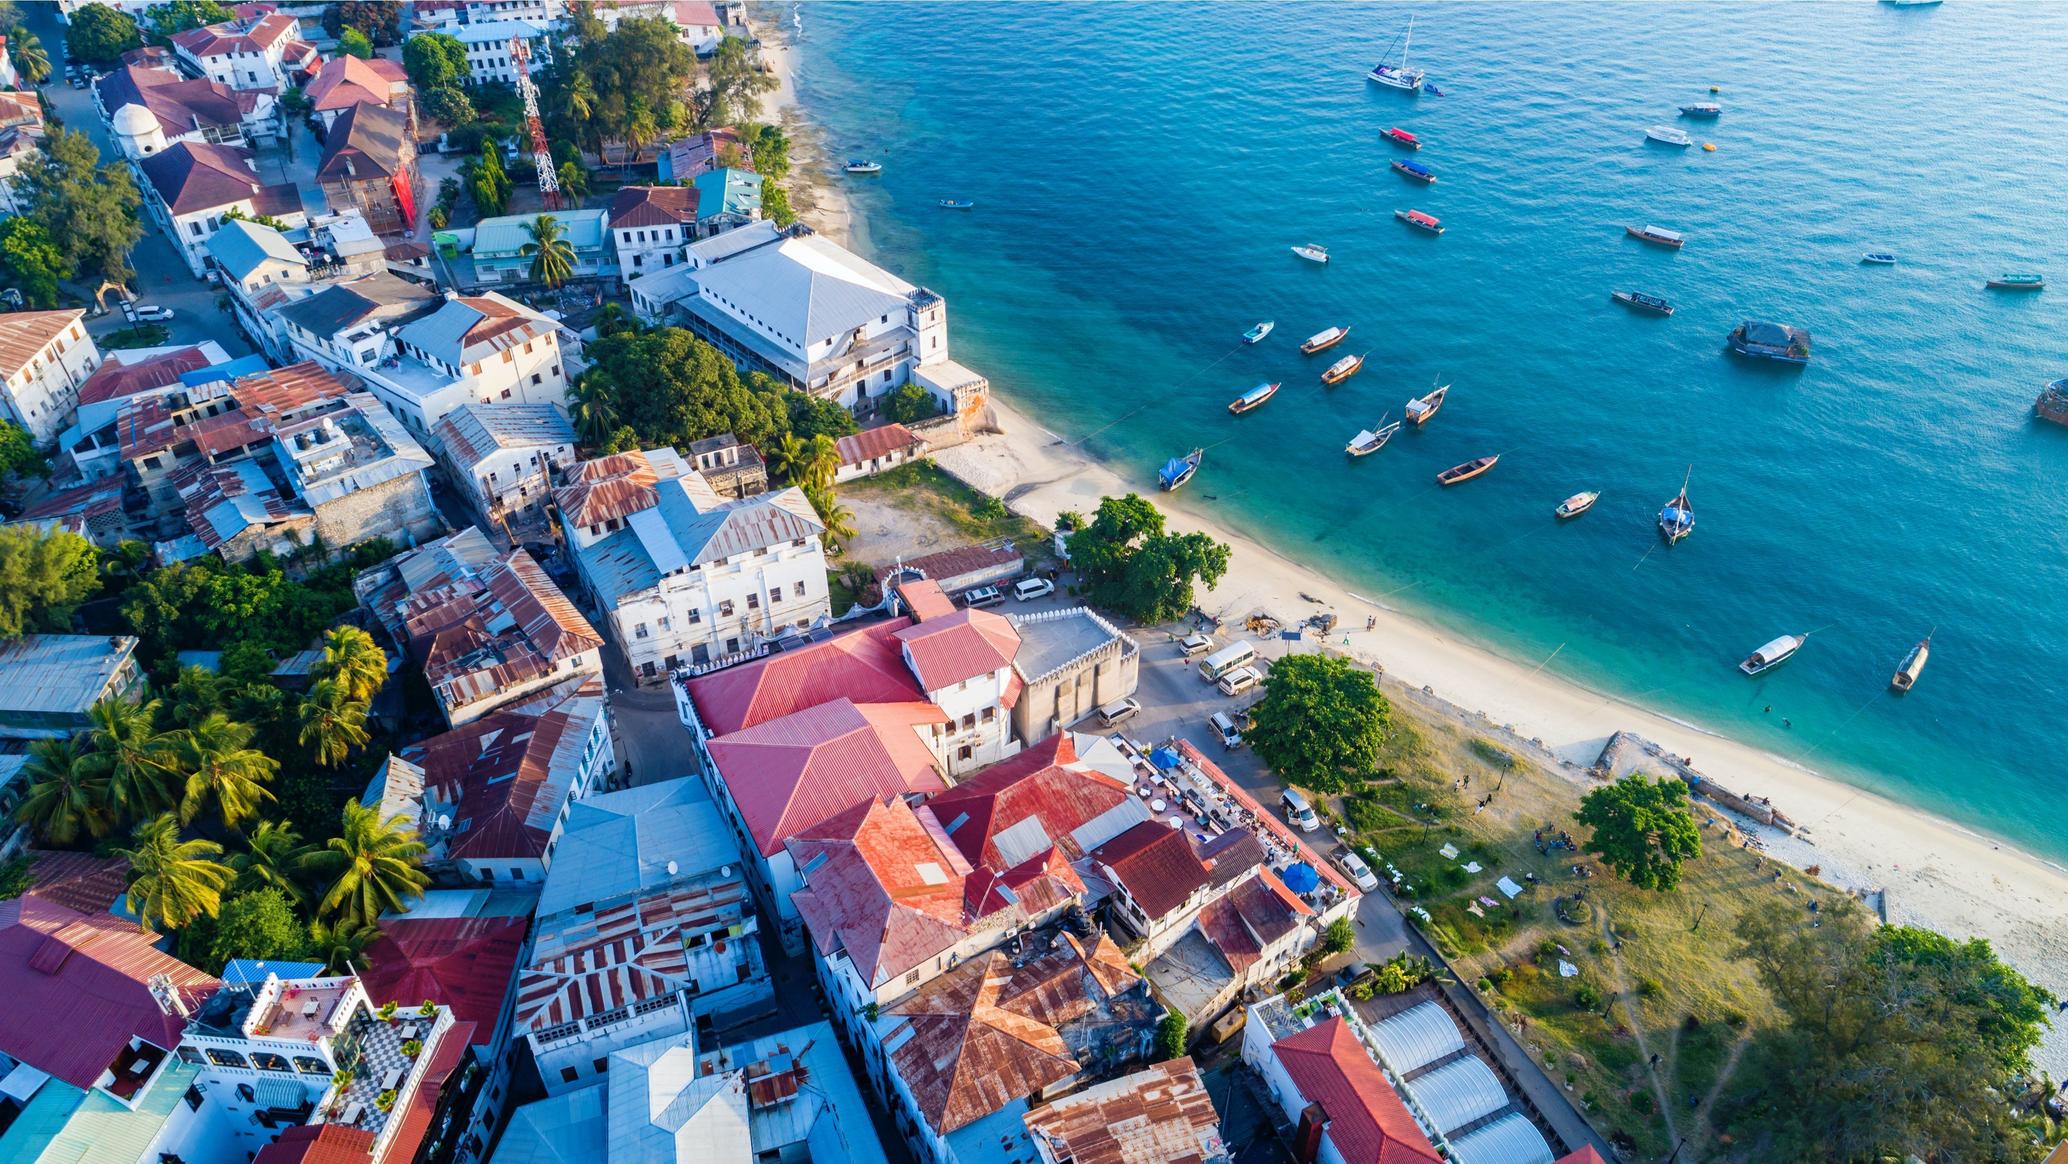 Luxury and yet affordable prices to explore Zanzibar